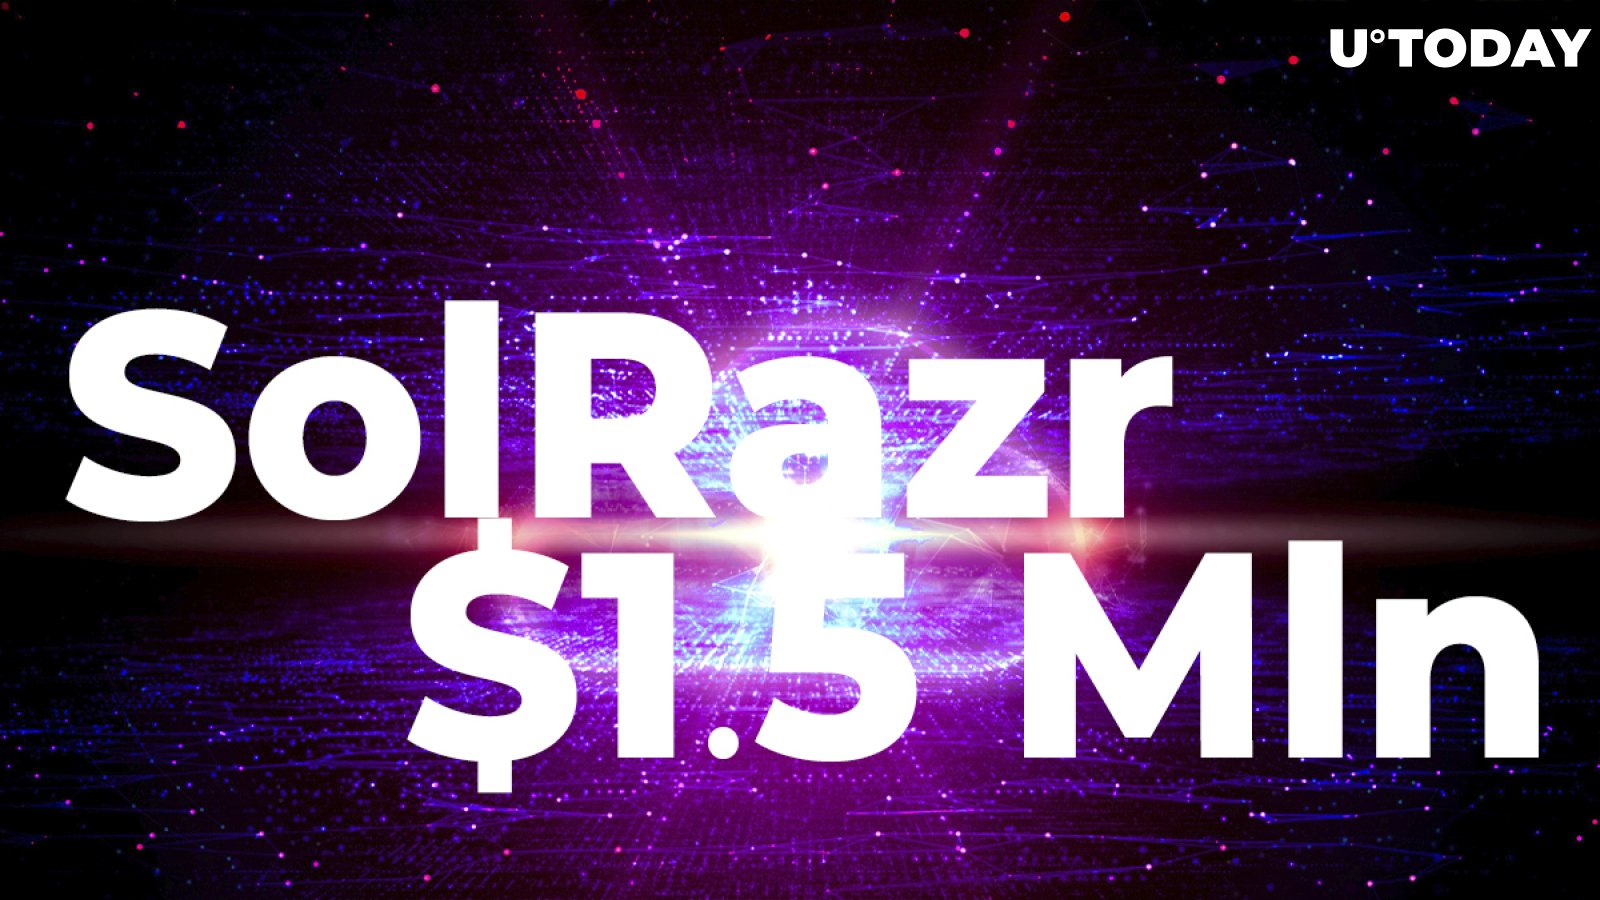 Solana-Based Dev Ecosystem SolRazr Raises $1.5 Million: Details